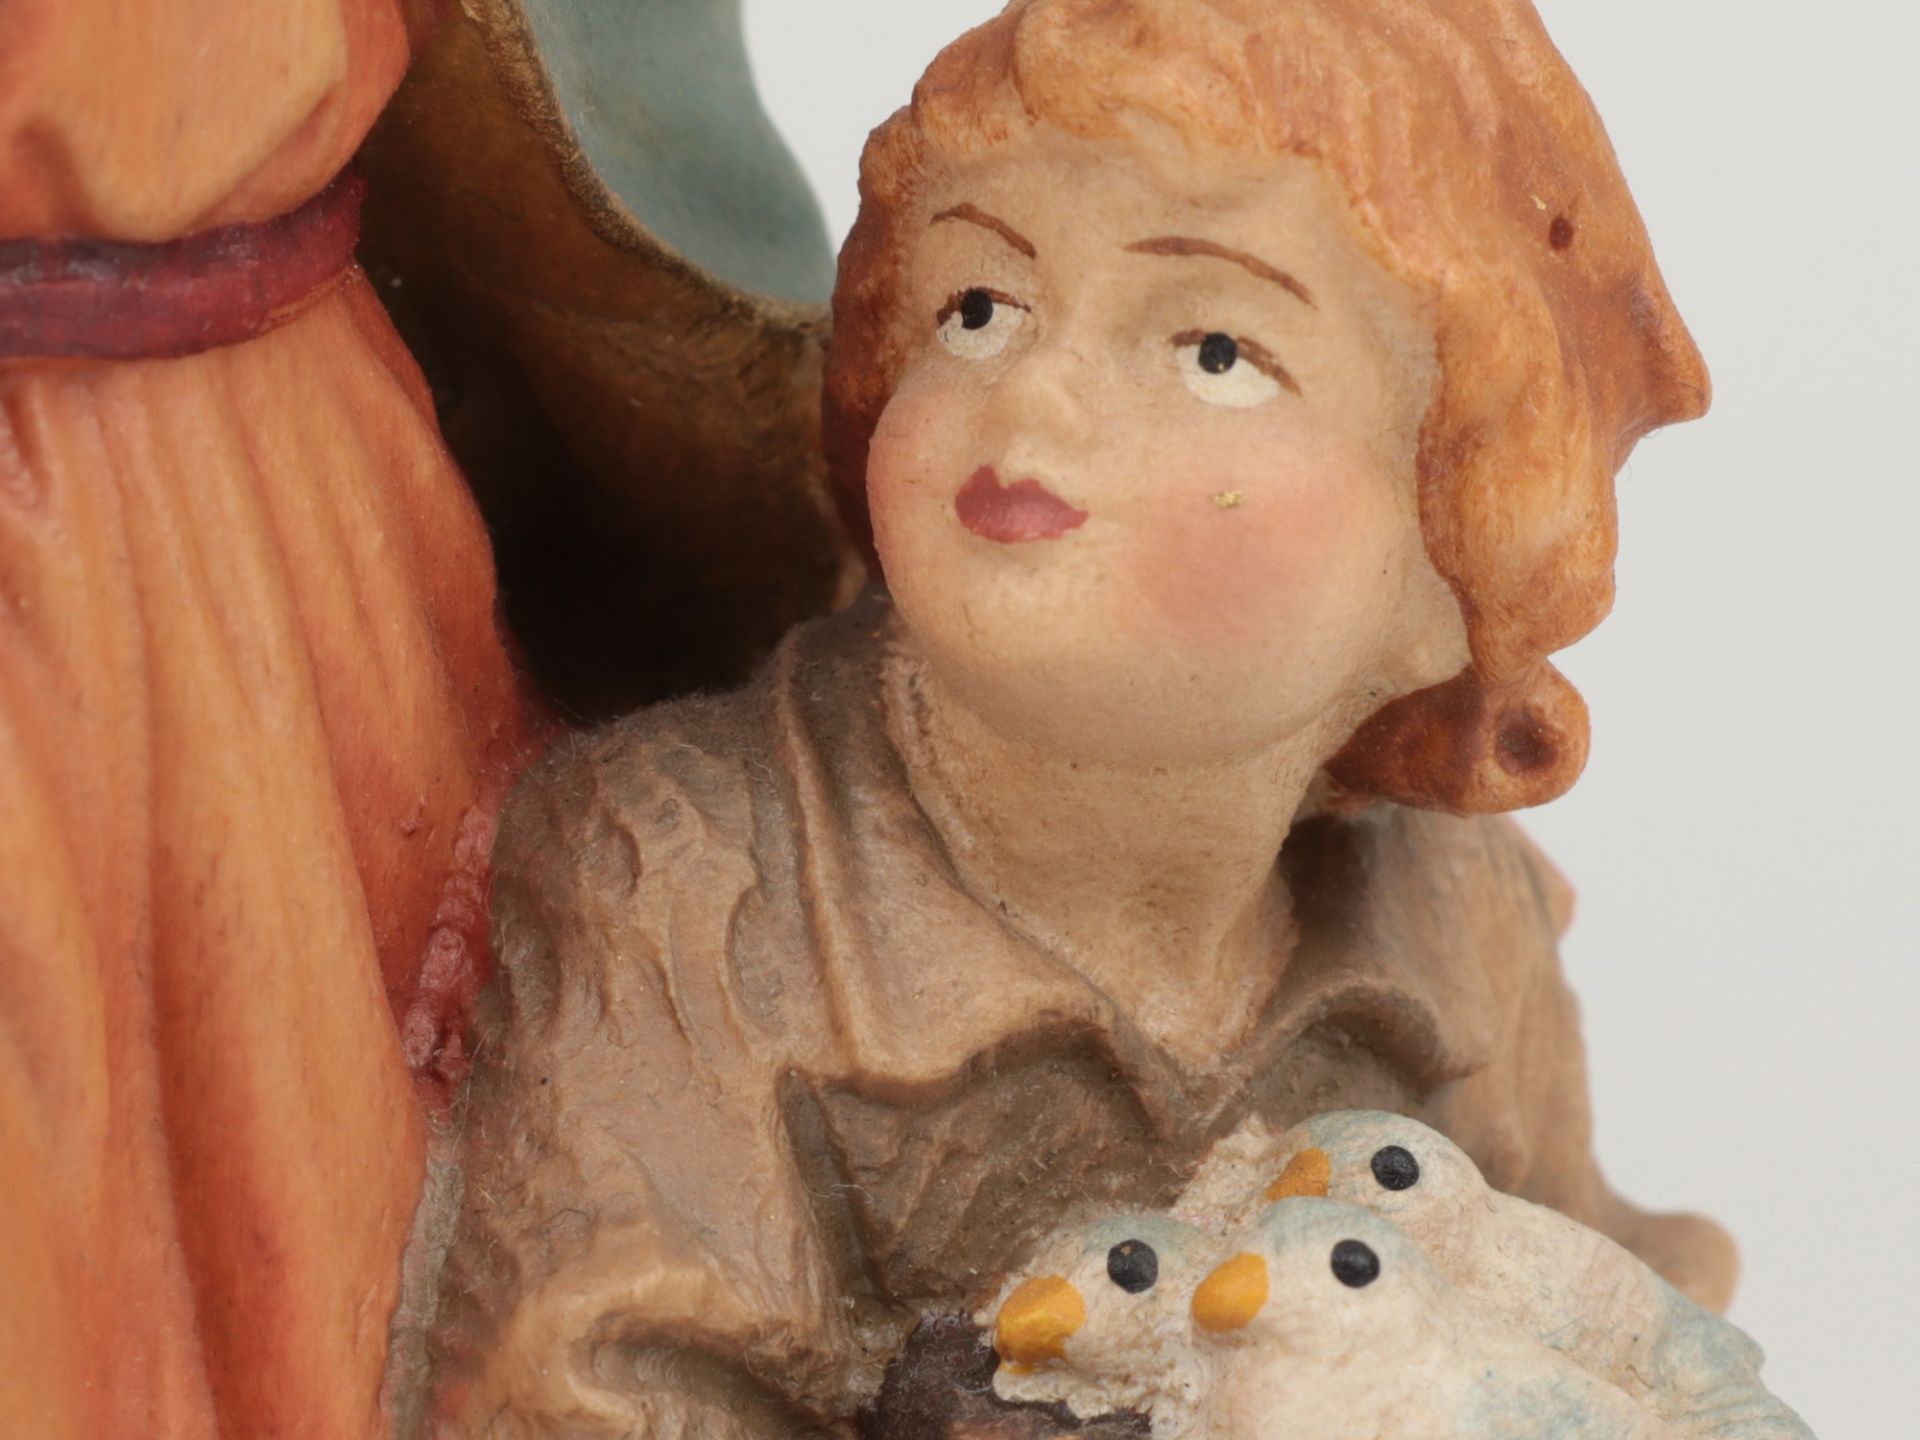 Krippenfigur - Südtirol Ewald Insam, Holz, geschnitzt, farbig bemalt, tlw. vergoldet, Engel mit - Image 4 of 5